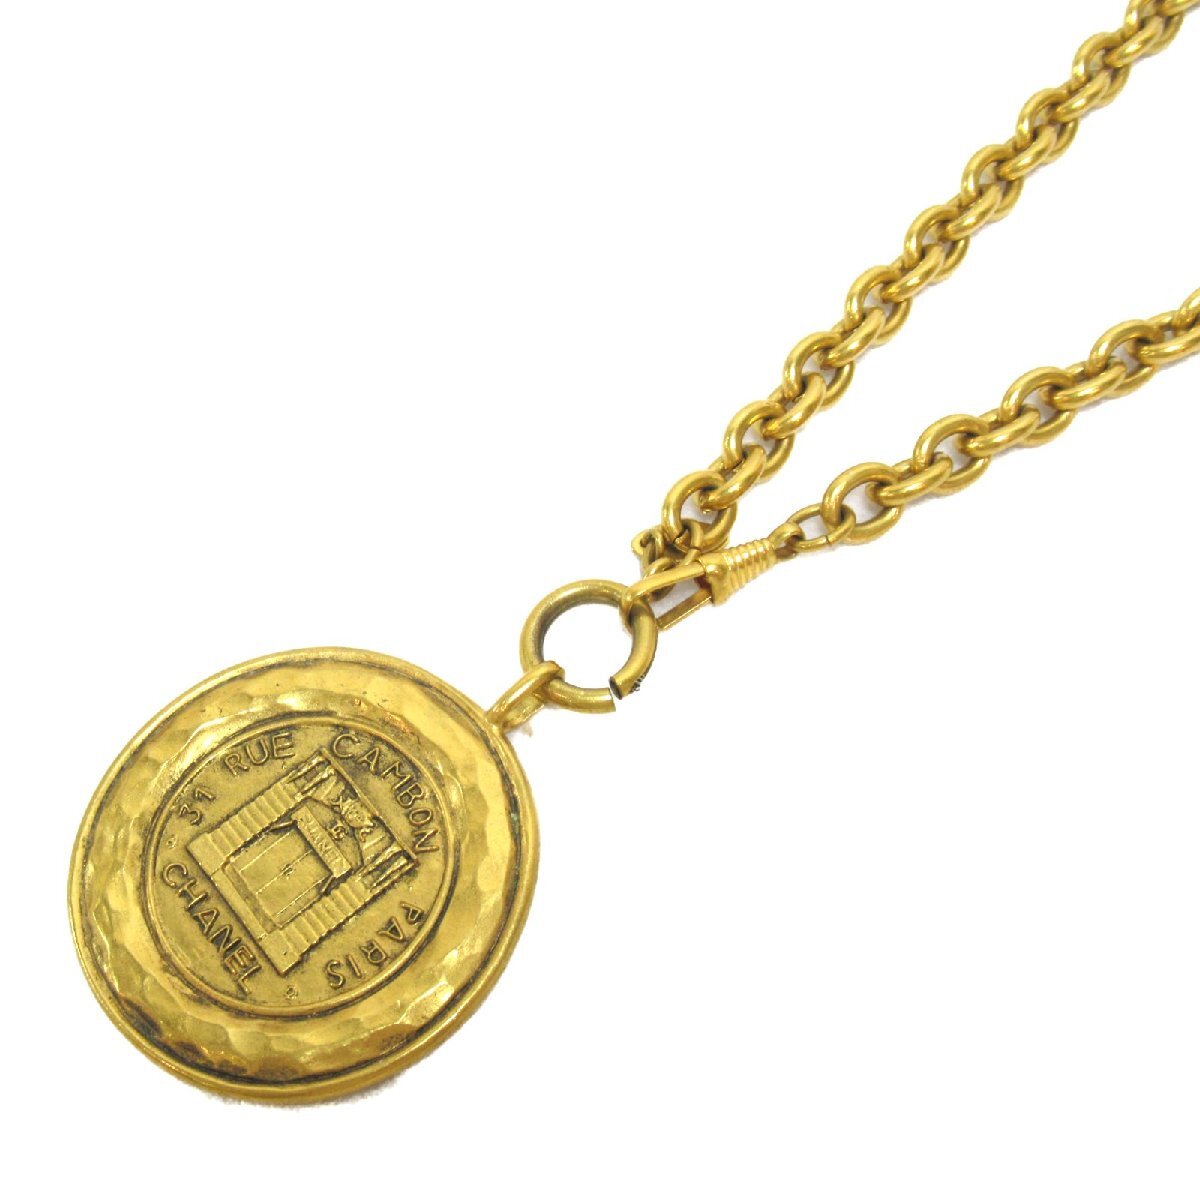  Chanel медаль колье бренд off CHANEL GP( Gold металлизированный ) колье GP б/у женский 